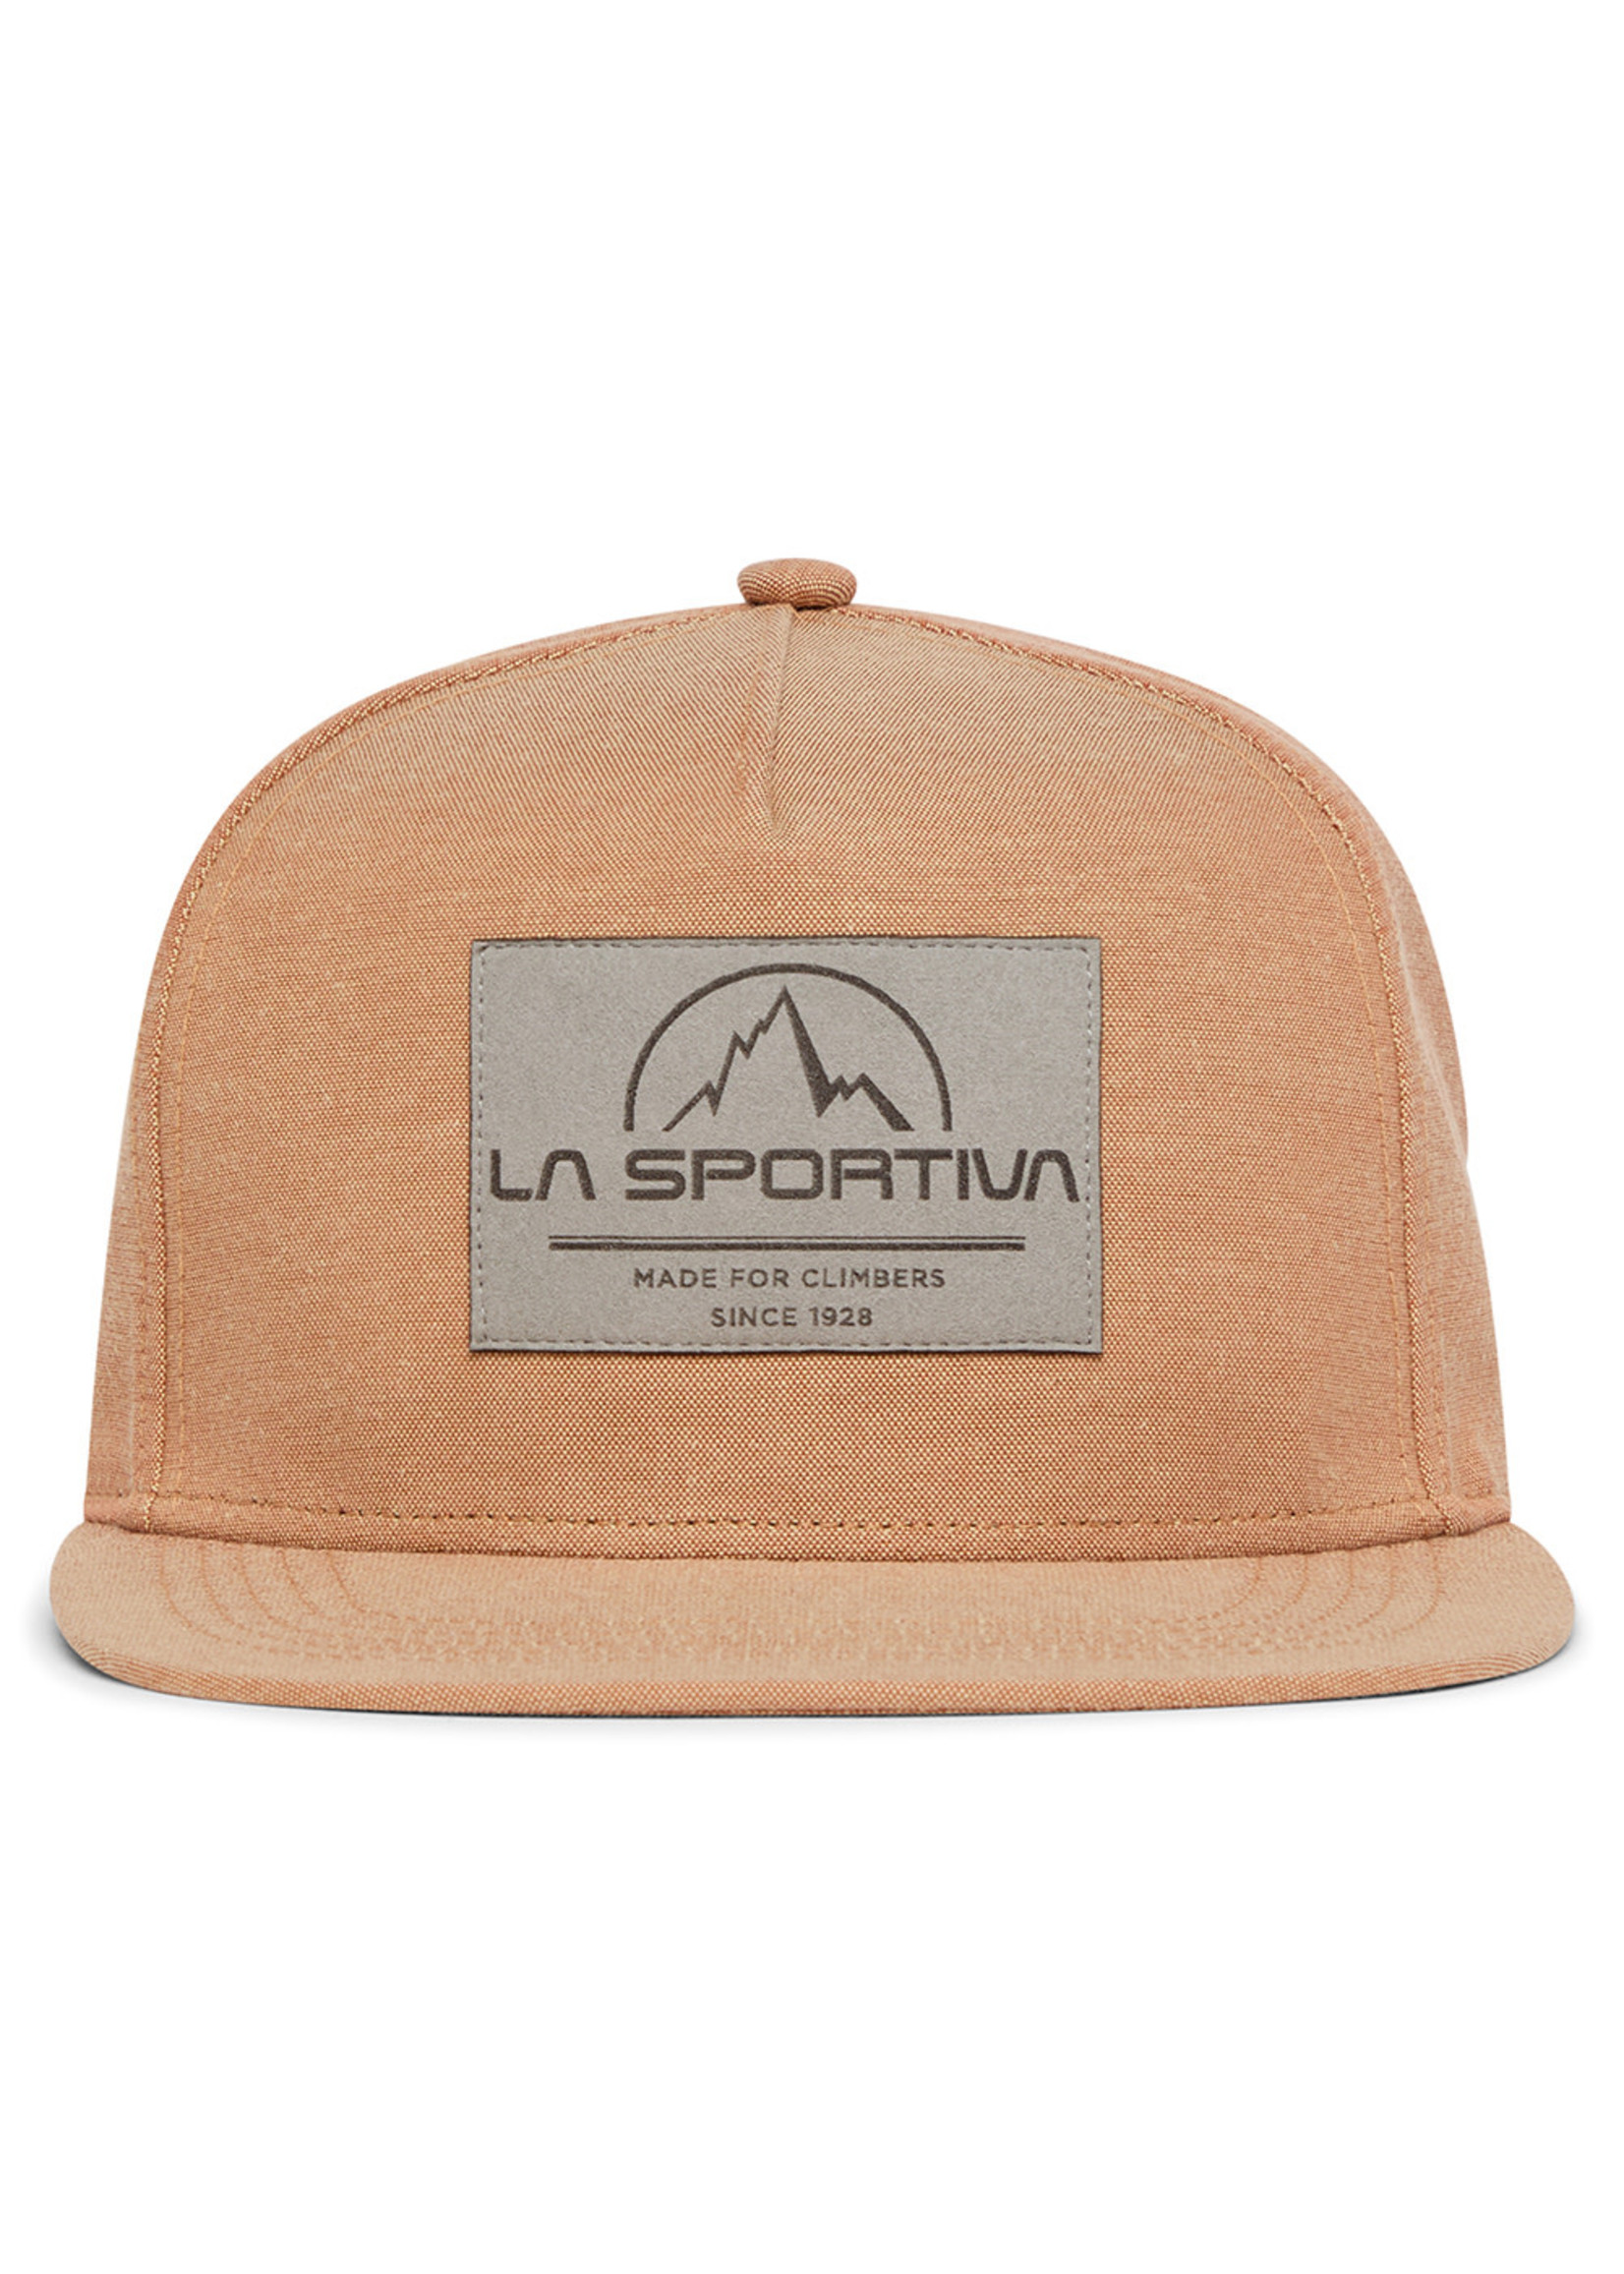 La Sportiva La Sportiva Flat Hat